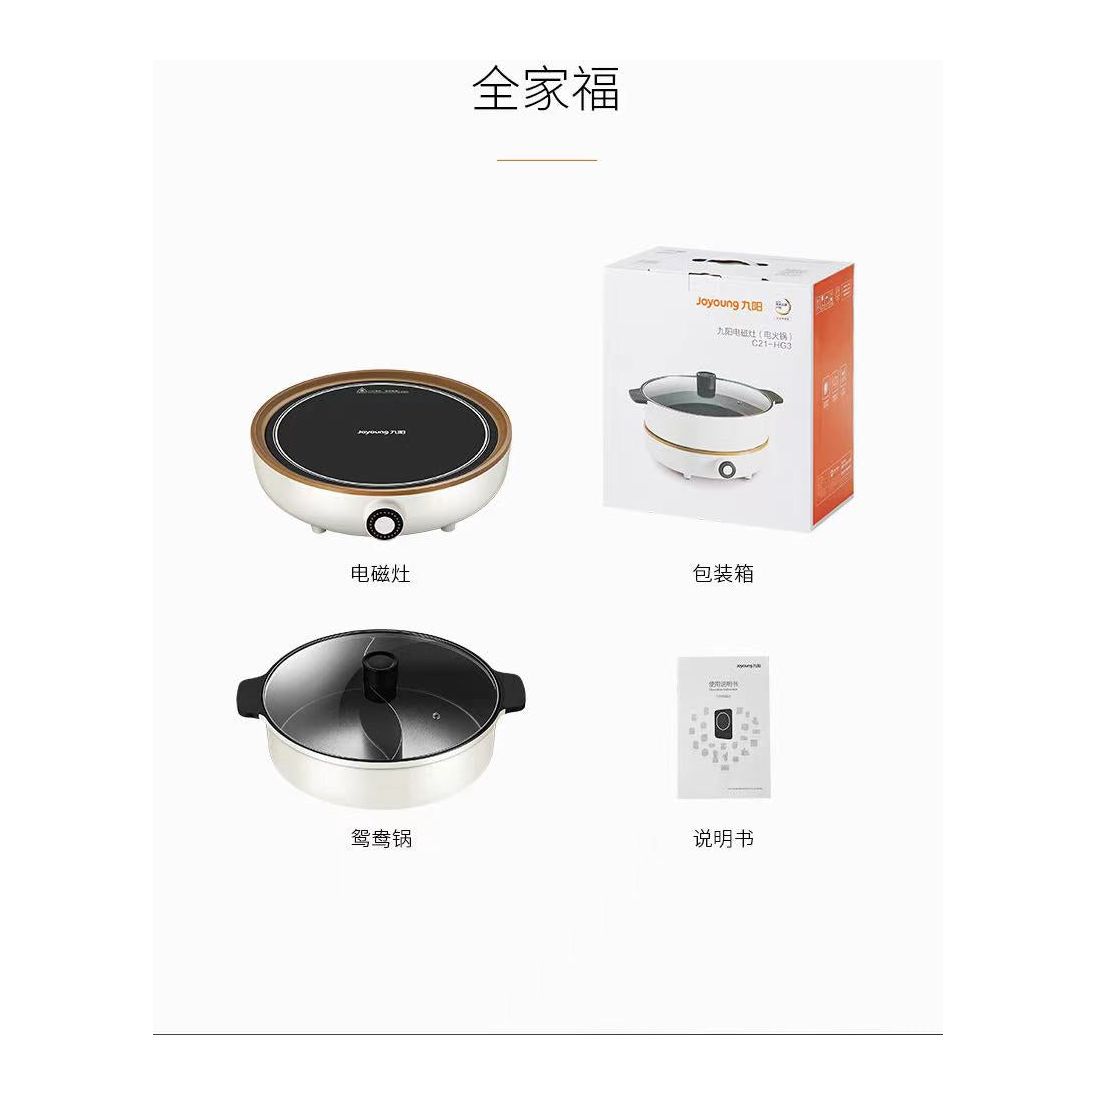 Joyoung Induction Cooker Yuanyang Hot Pot C21-CL01